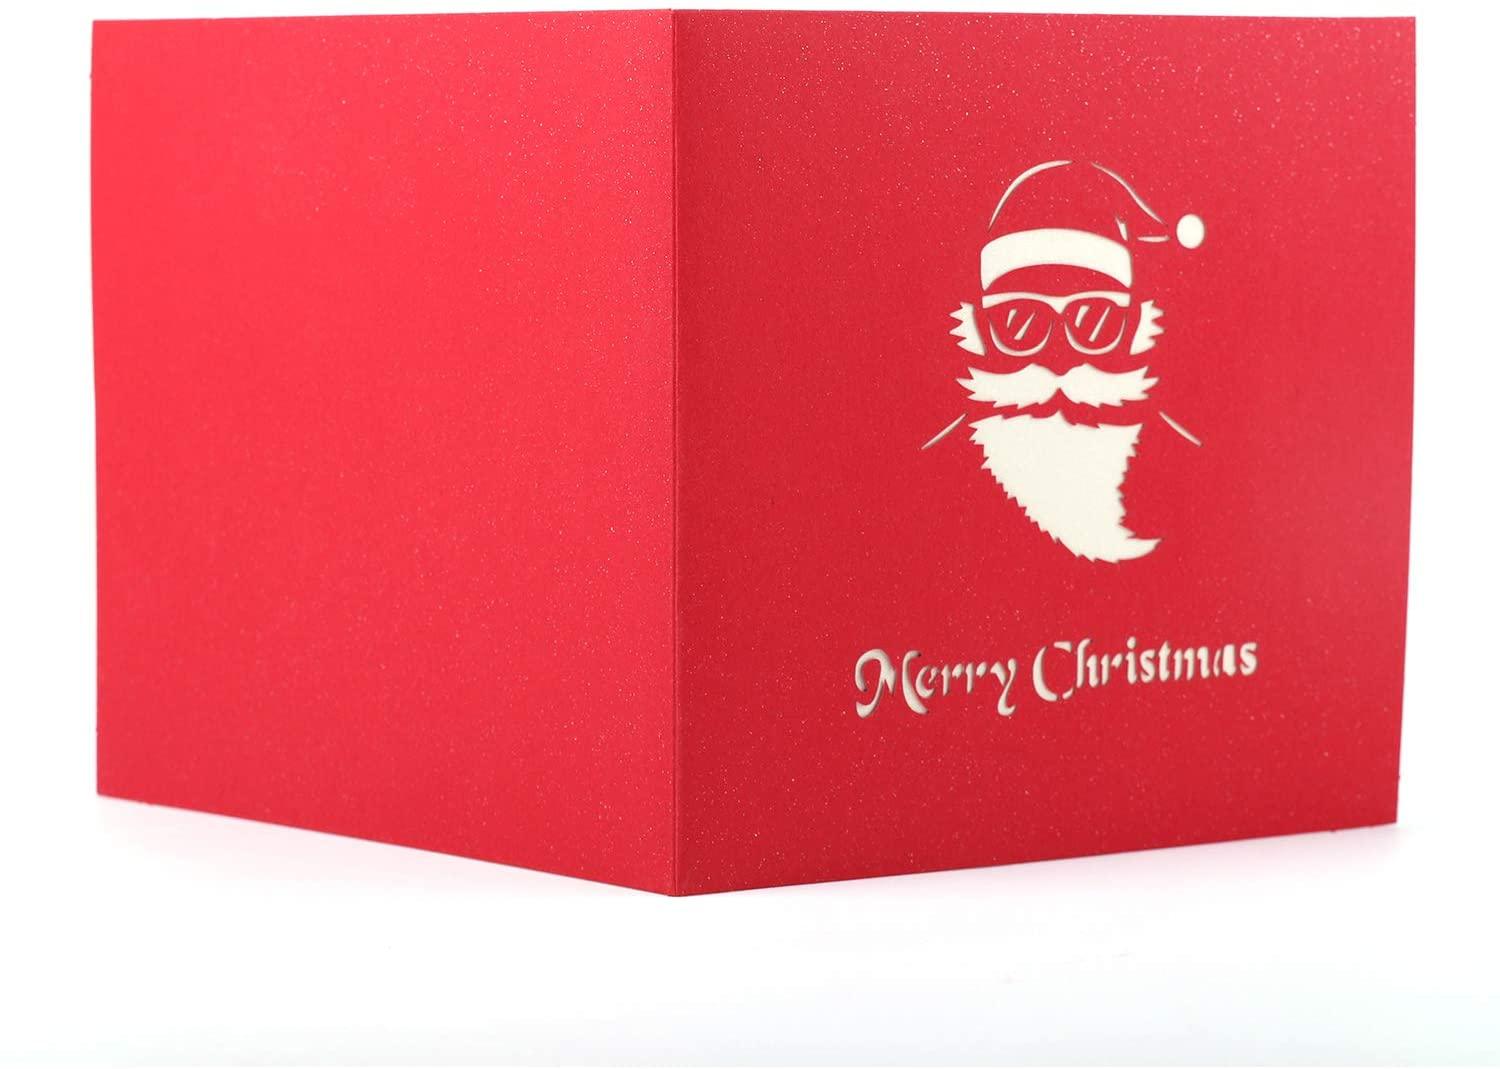 Santa on Motorbike Christmas Card Handmade 3D Pop Up Greeting Card - Lasercutwraps Shop